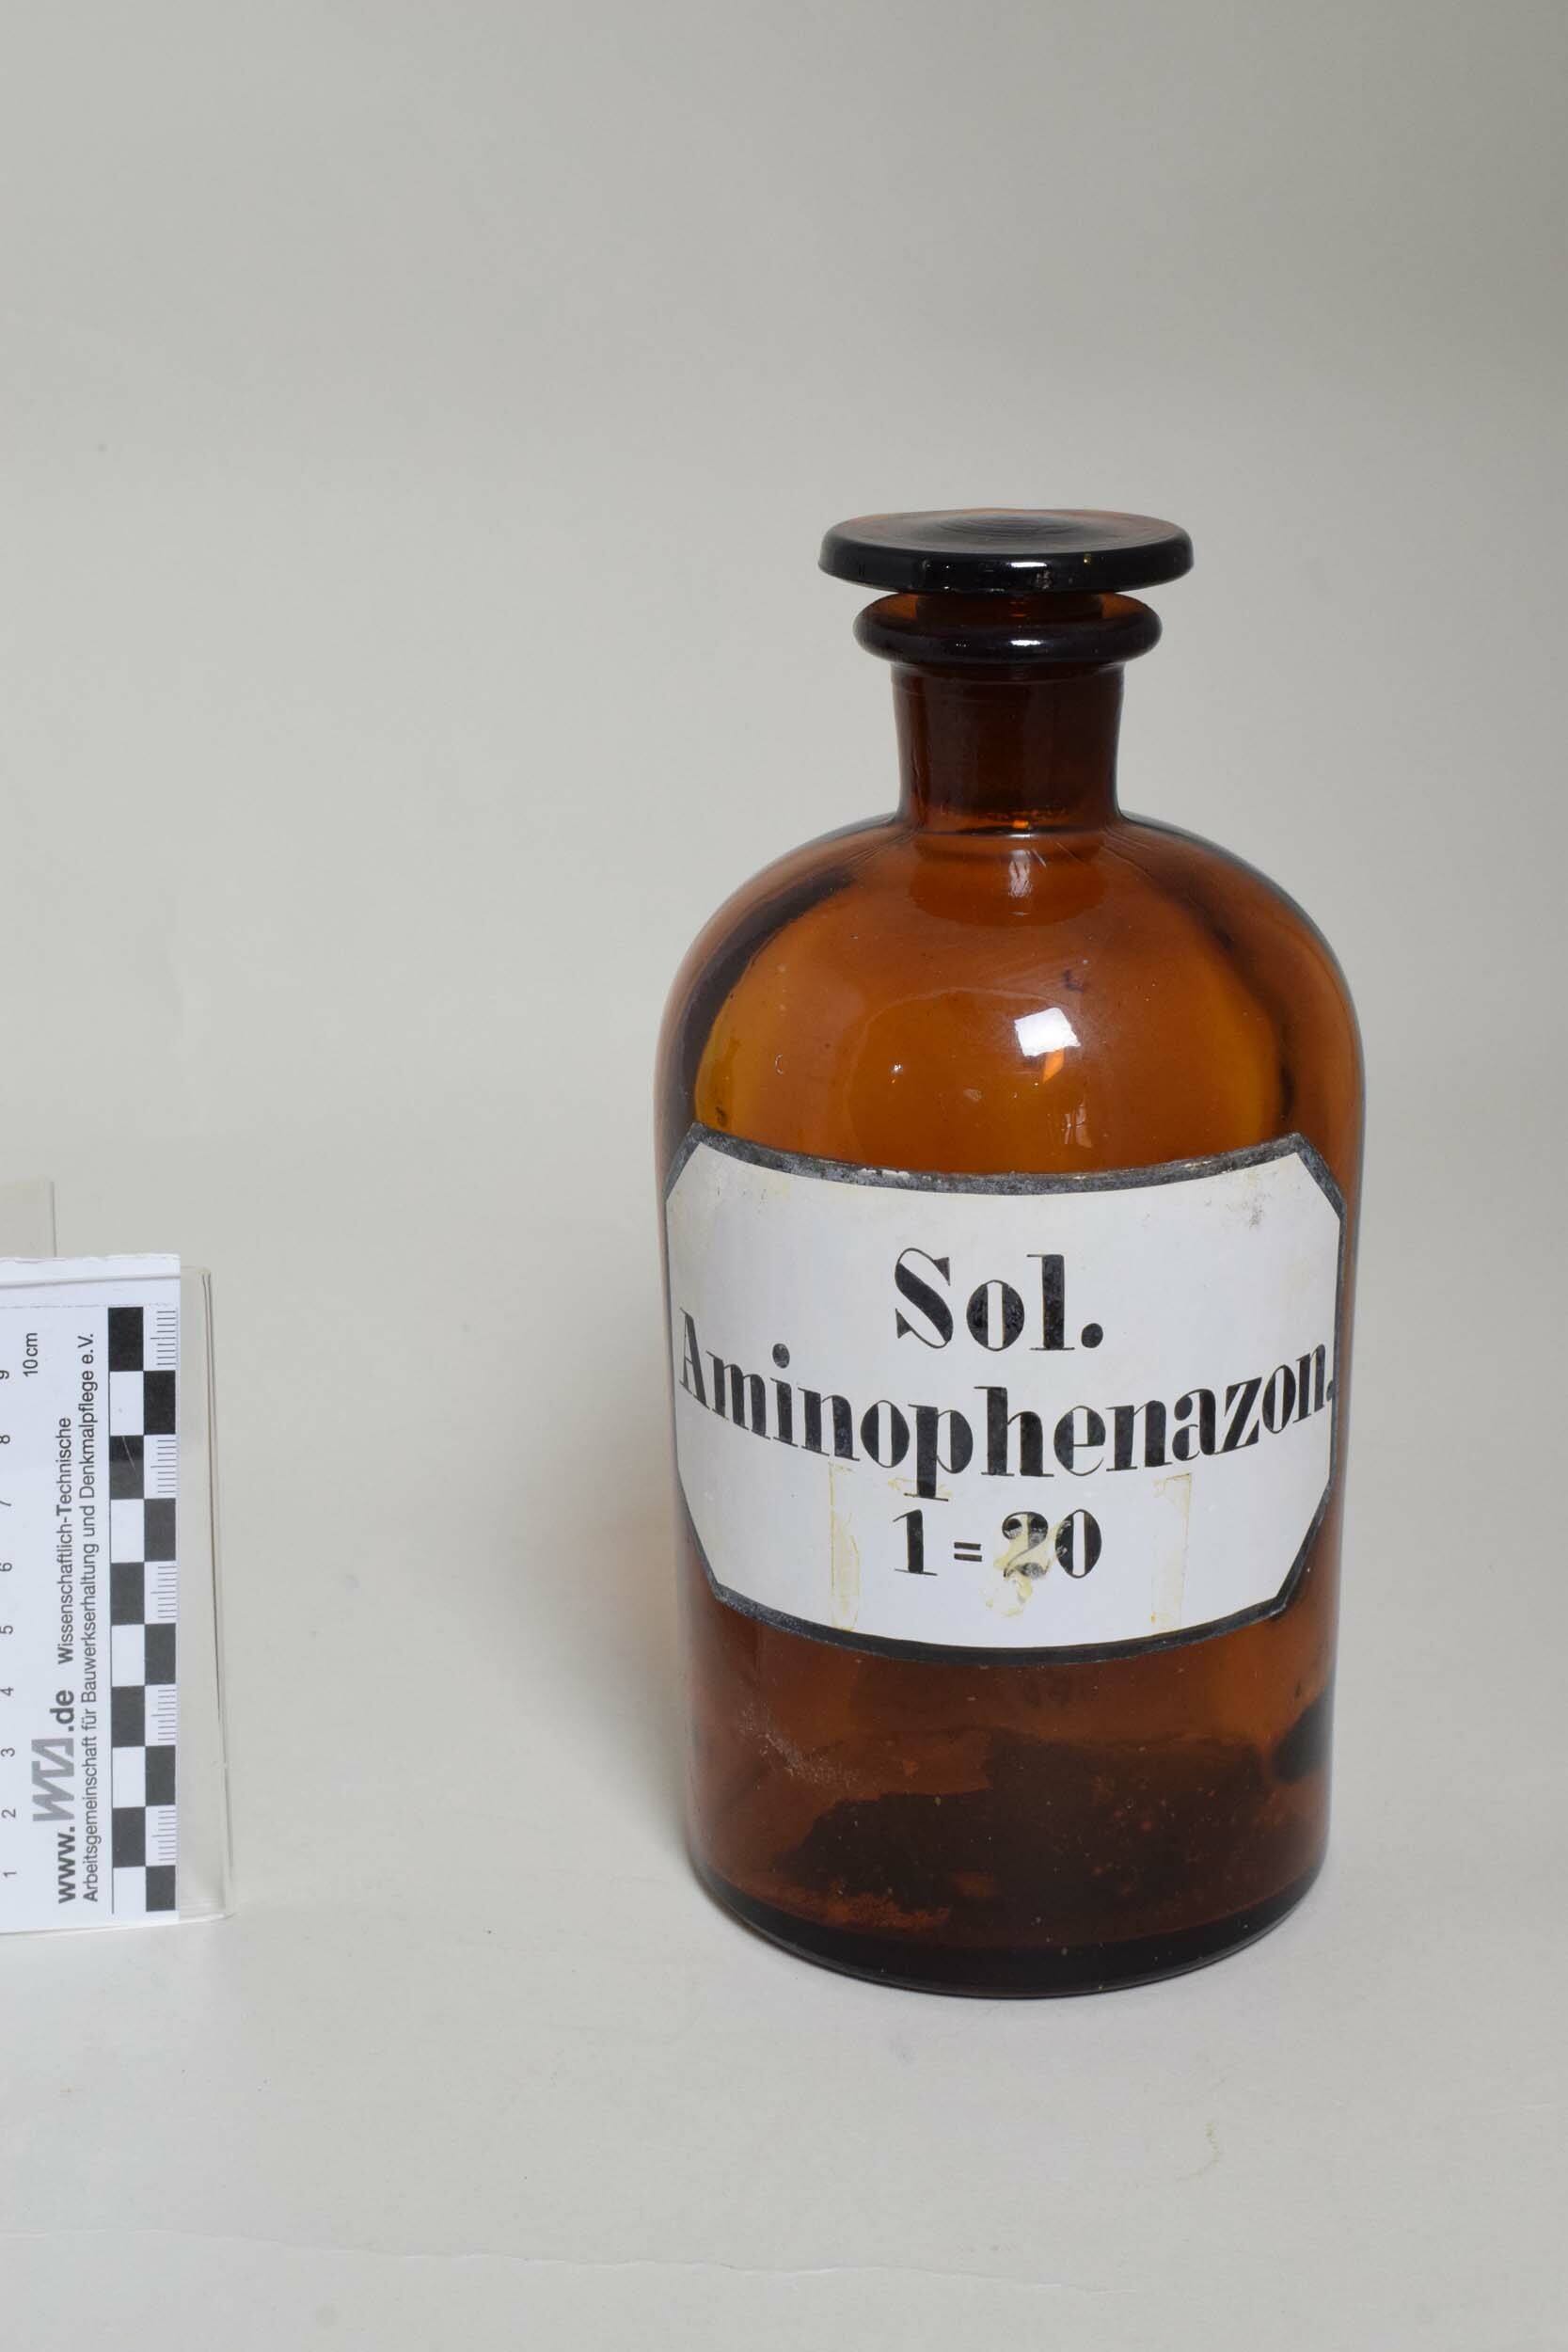 Apothekenflasche "Sol. Aminophenazon. / 1=20" (Heimatmuseum Dohna CC BY-NC-SA)